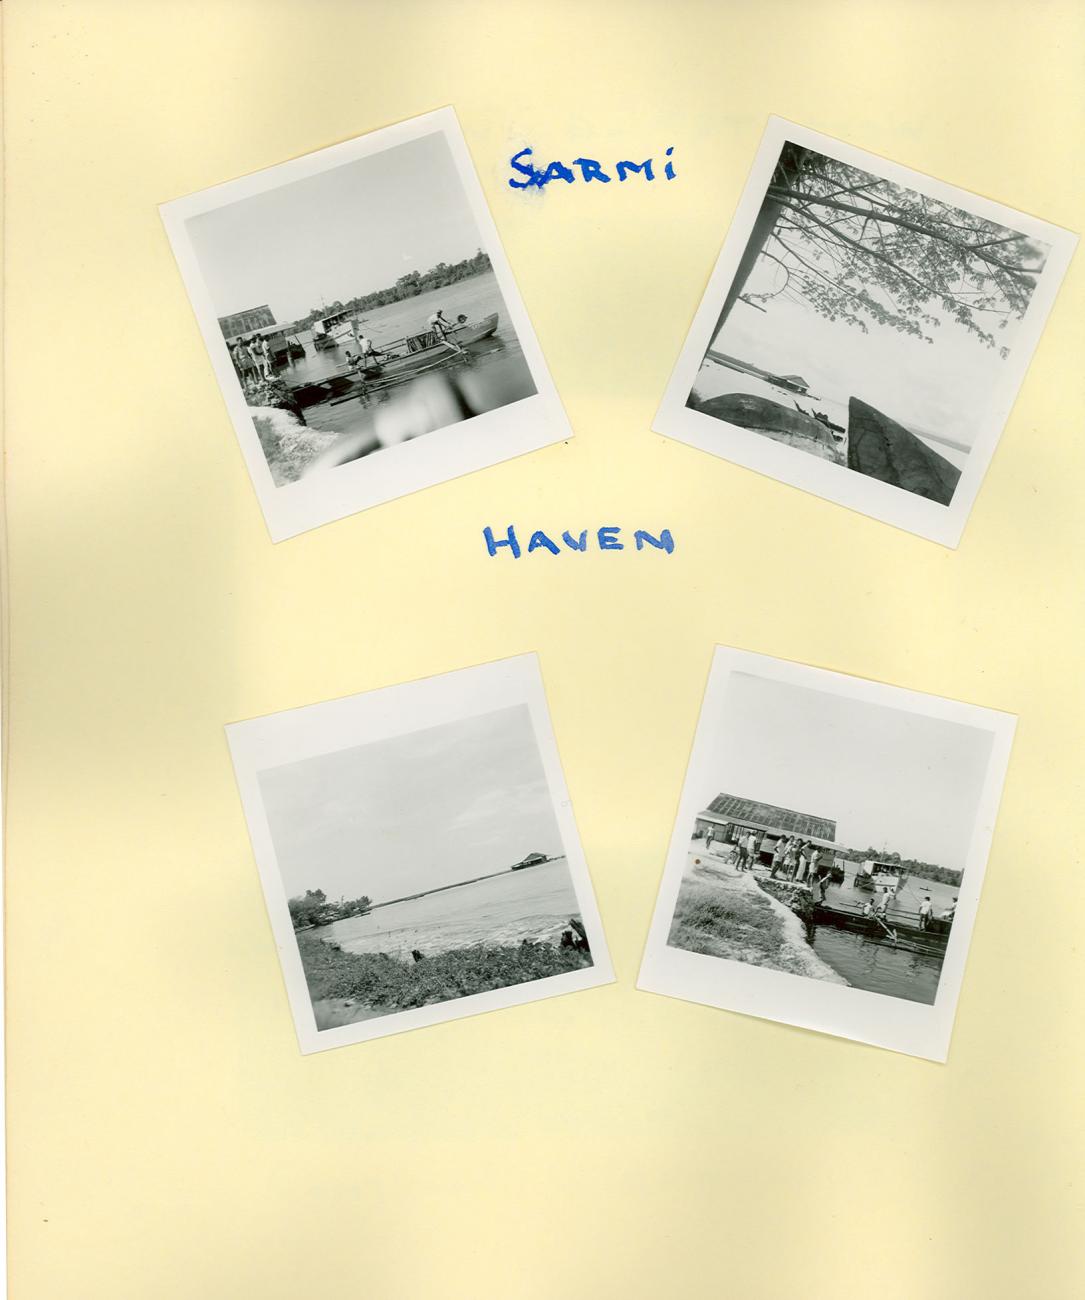 BD/83/52 - 
De haven van Sarmi 
